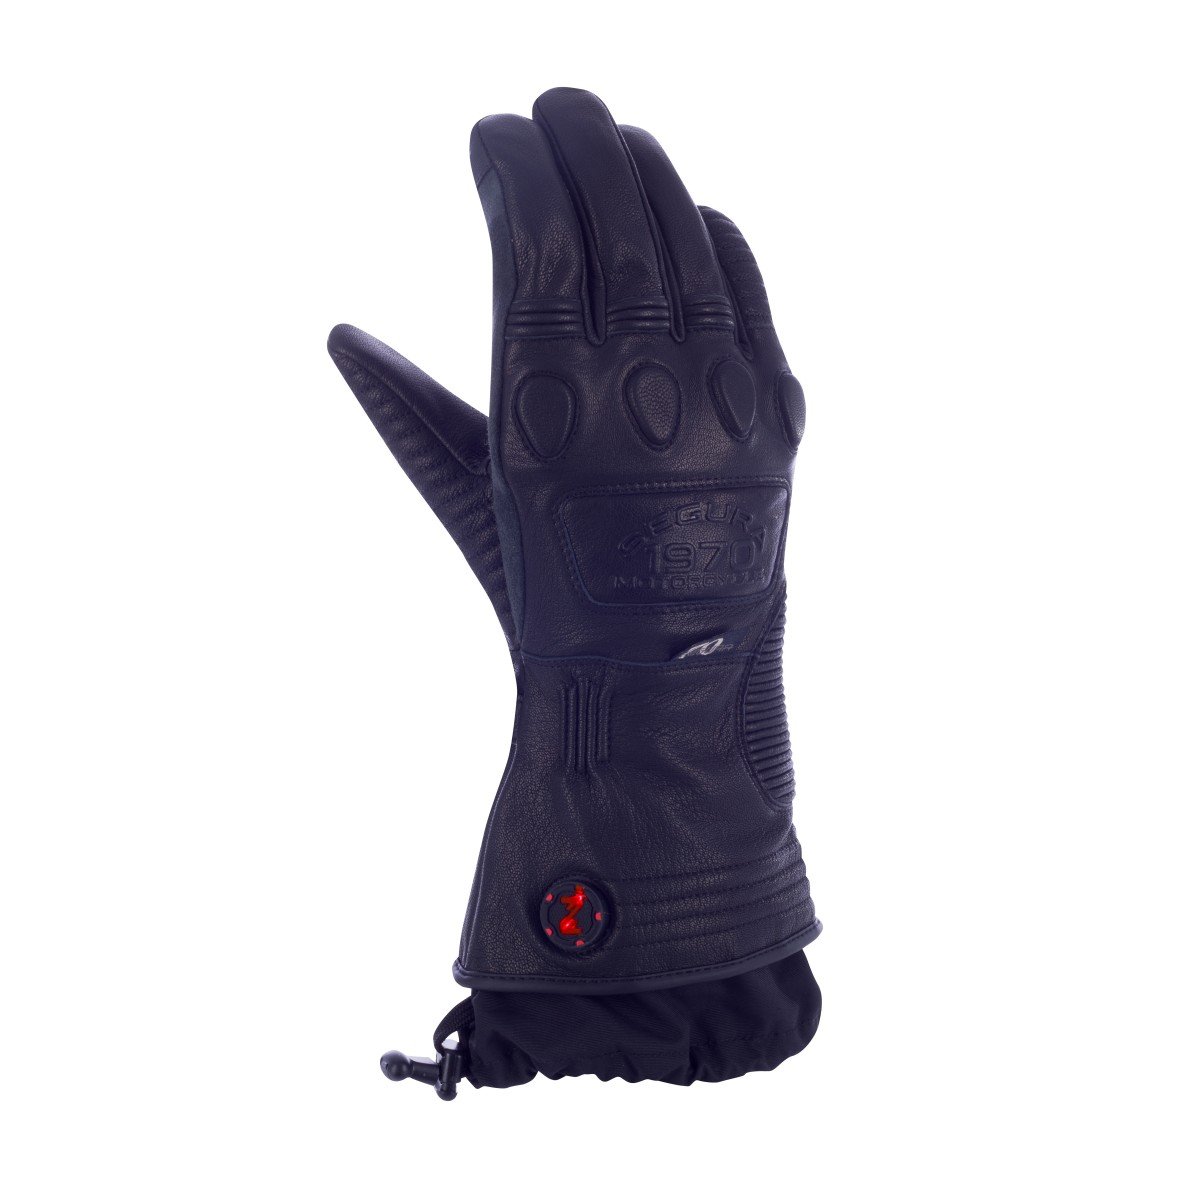 Image of Segura Shiro Black Heated Gloves Size T13 EN